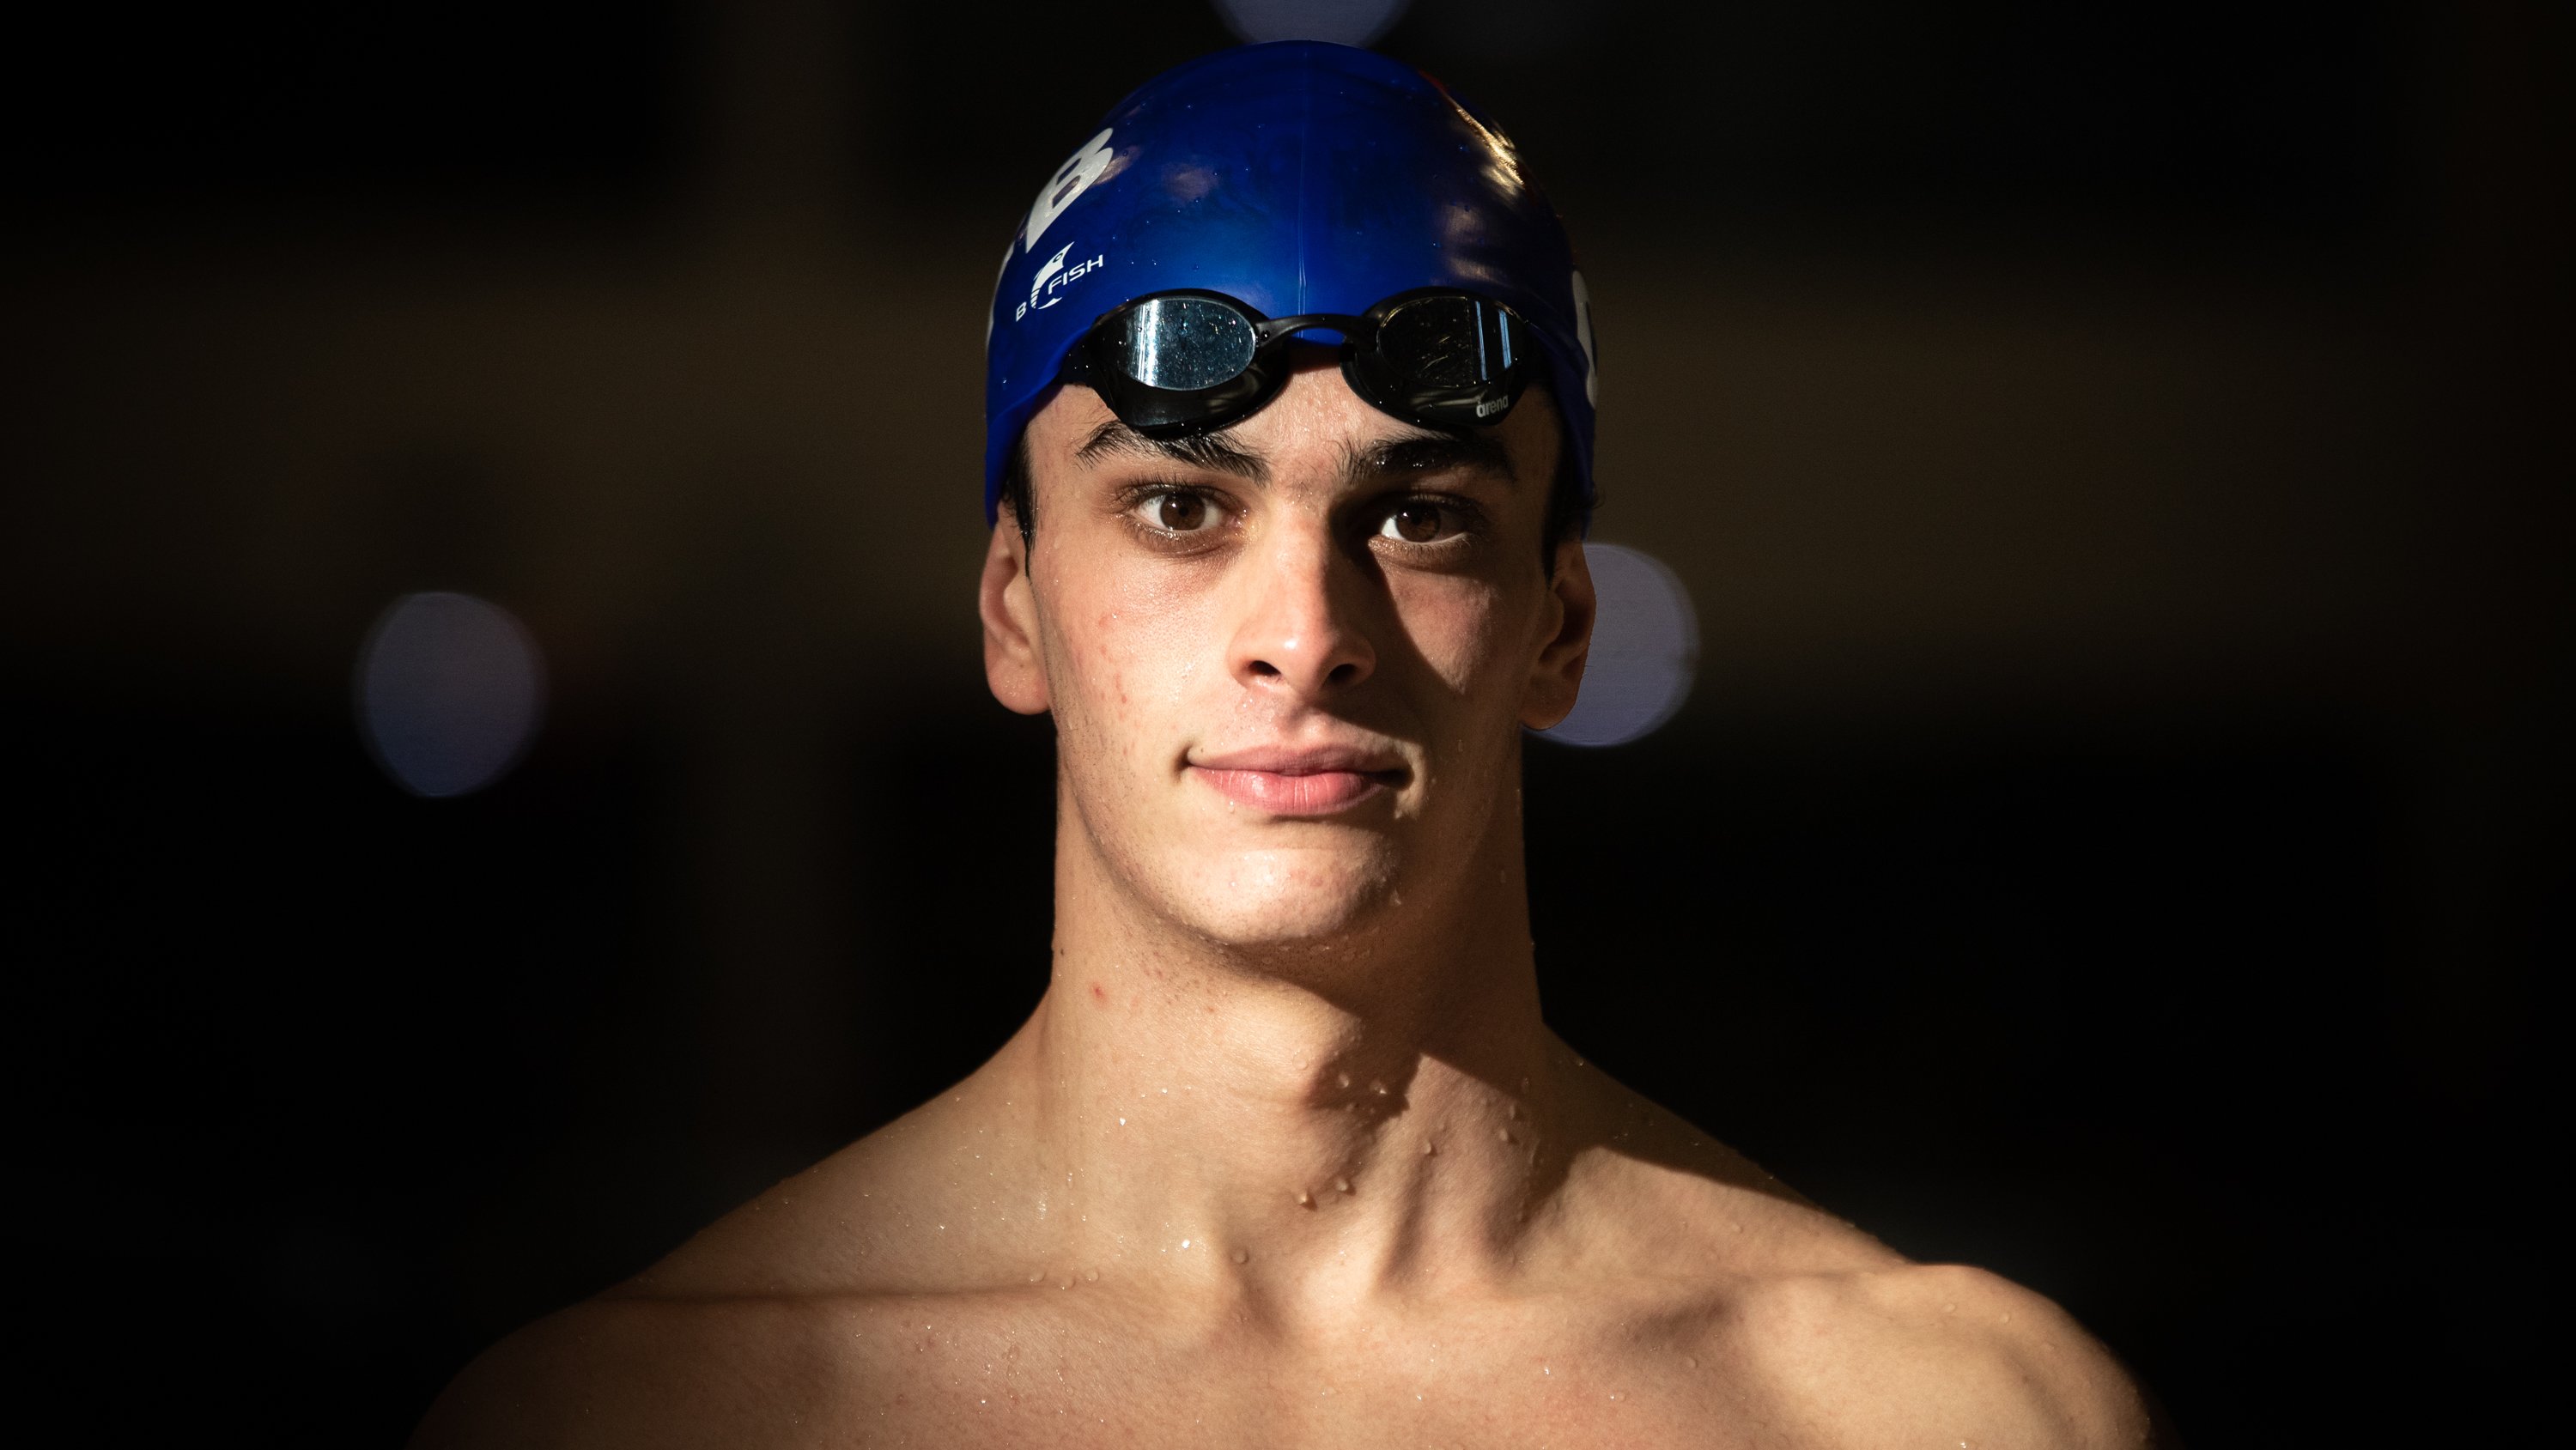 Reportagem &quot;O meu primeiro voto&quot;: Entrevista a Pedro Gomes de 18 anos, que é nadador do Belenenses. Piscinas do Jamor, Lisboa 14 de Janeiro de 2022 TOMÁS SILVA/OBSERVADOR